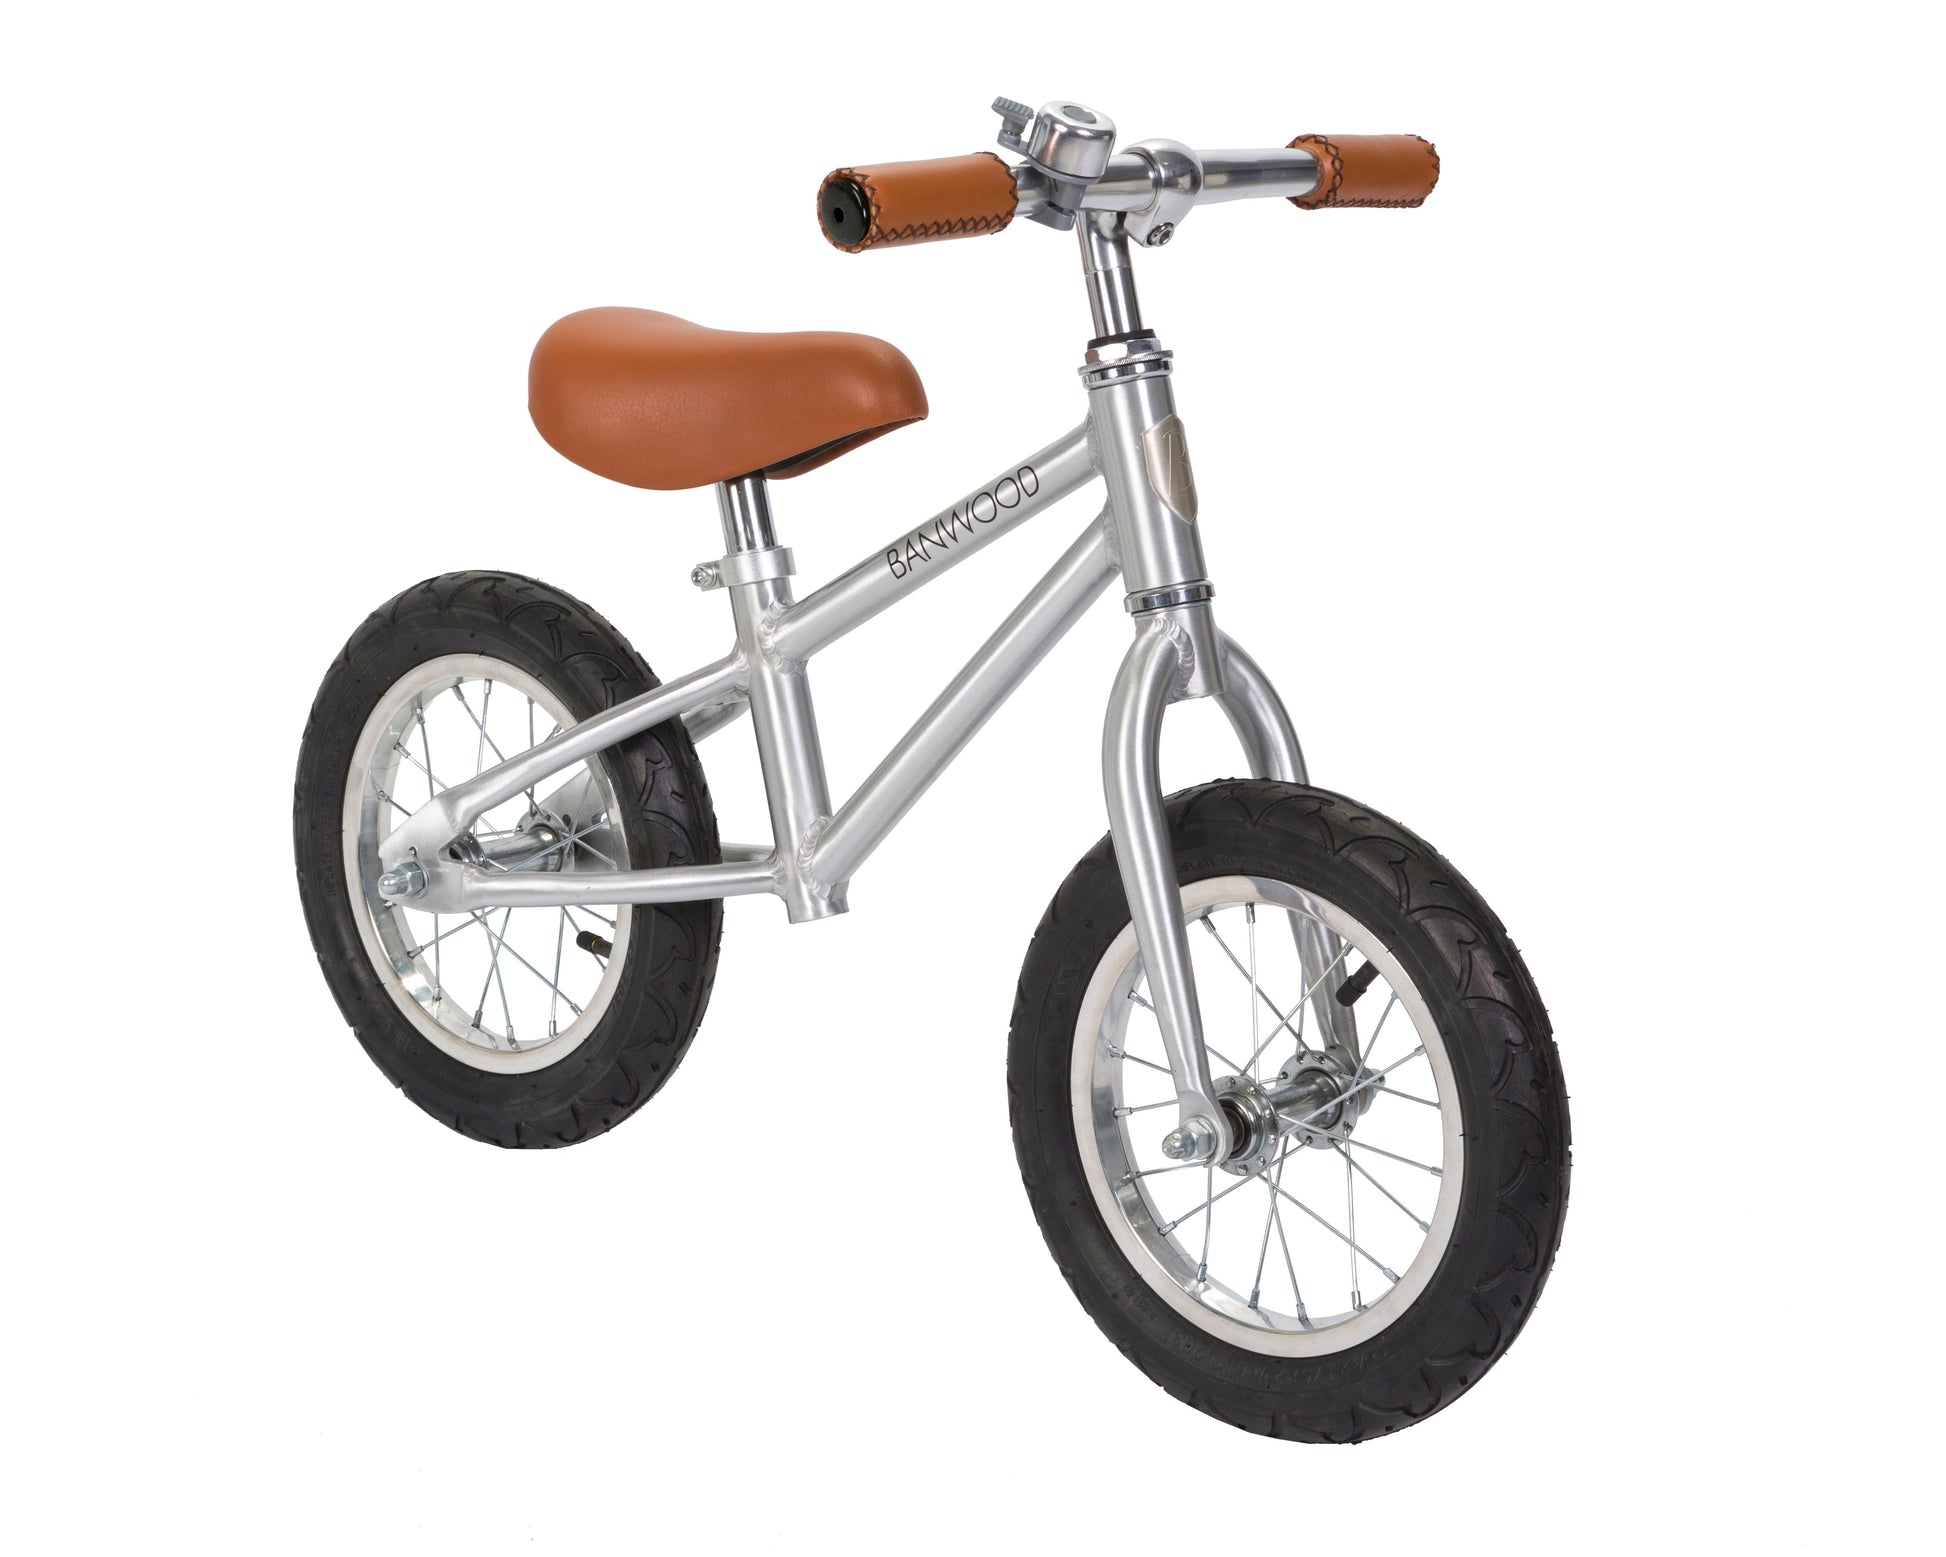 Banwood Balance Bike - First Go Multiple Colors - Alder & Alouette